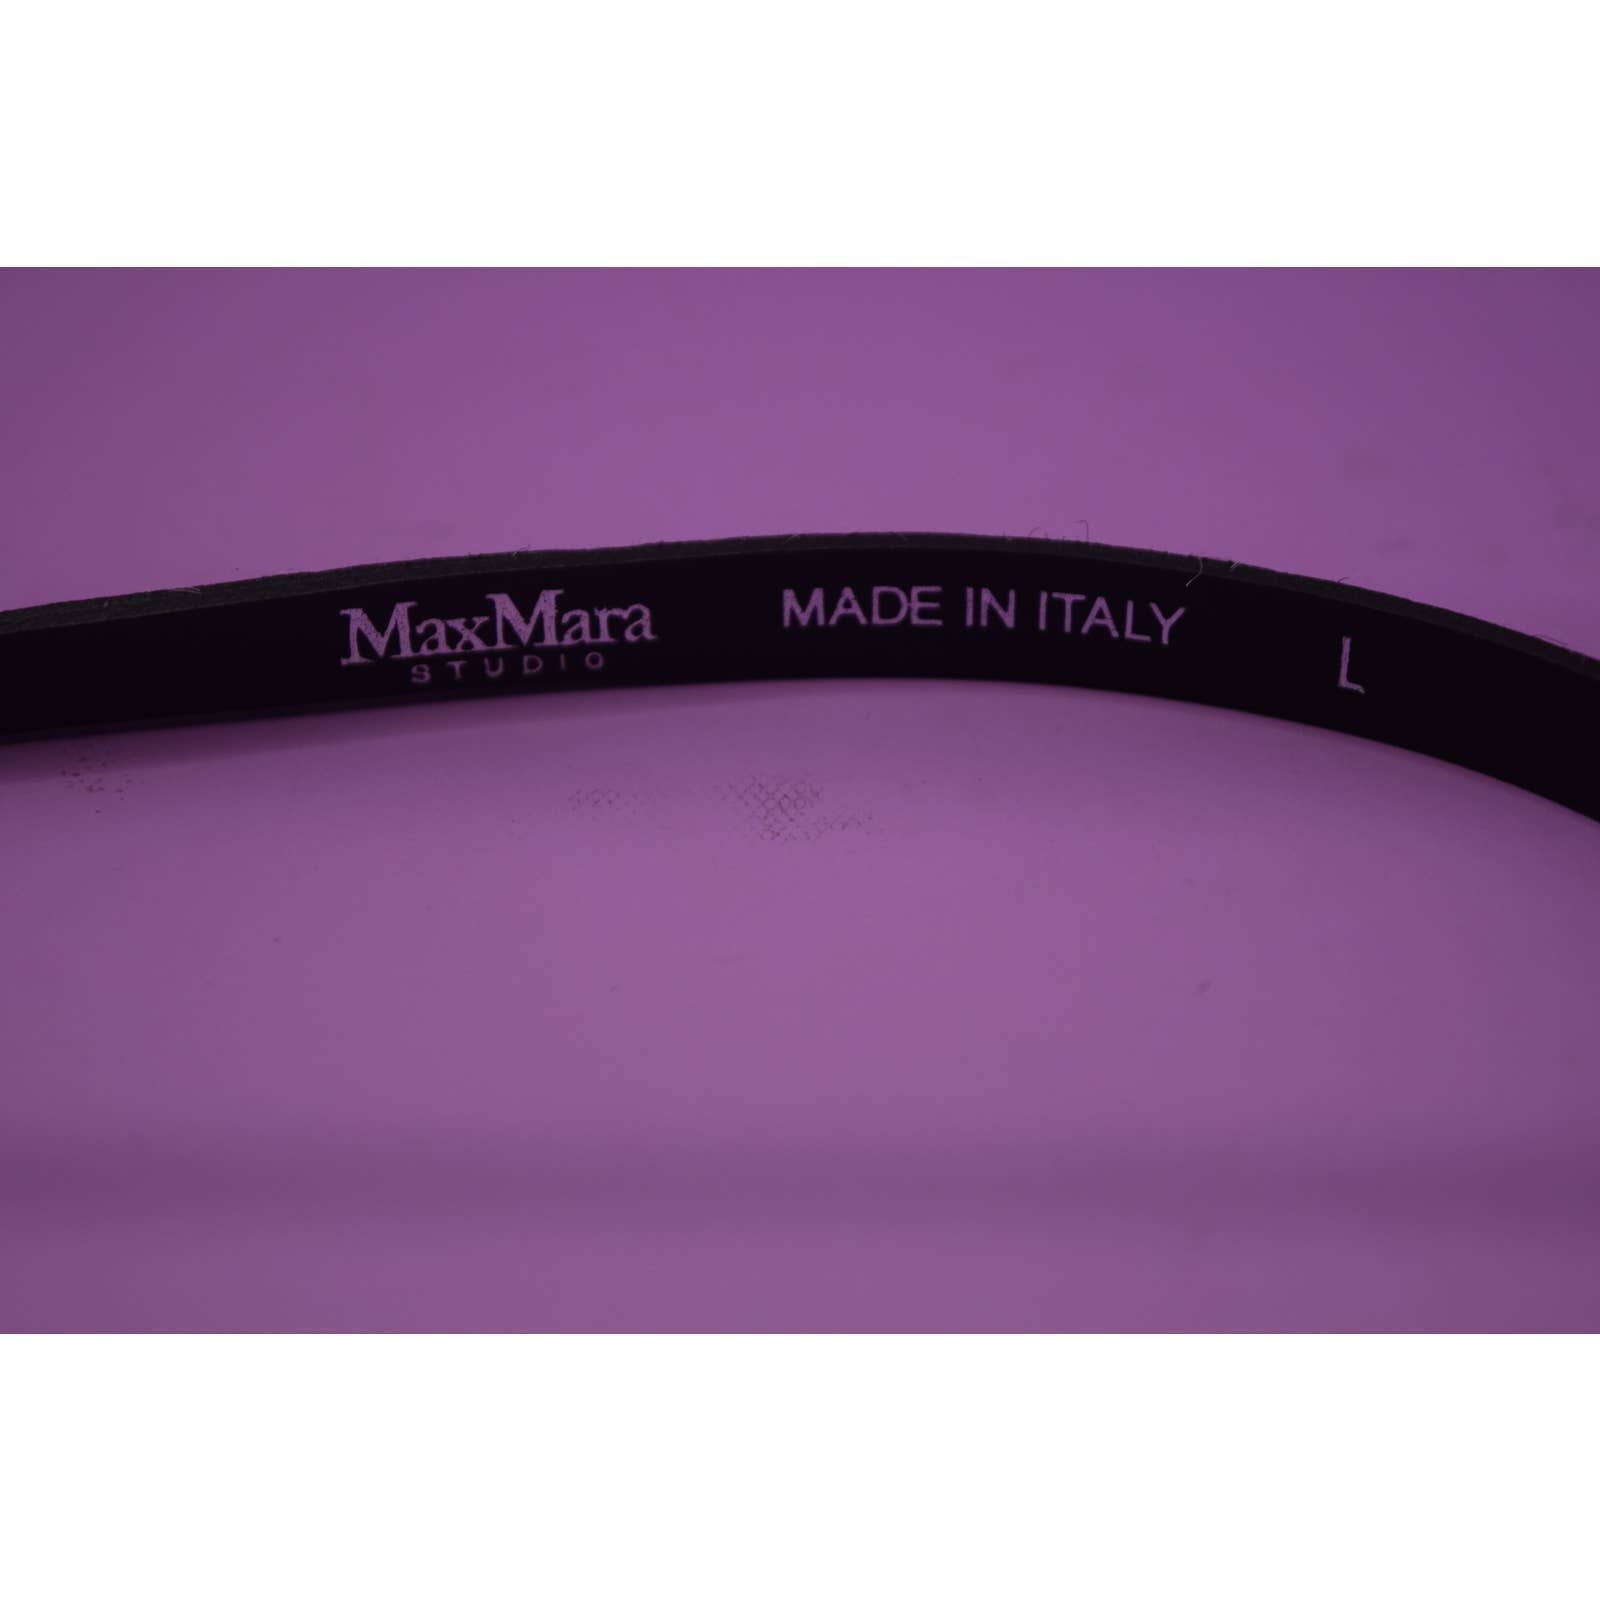 Max Mara Faux Fur Leather Black White Bow Belt - L